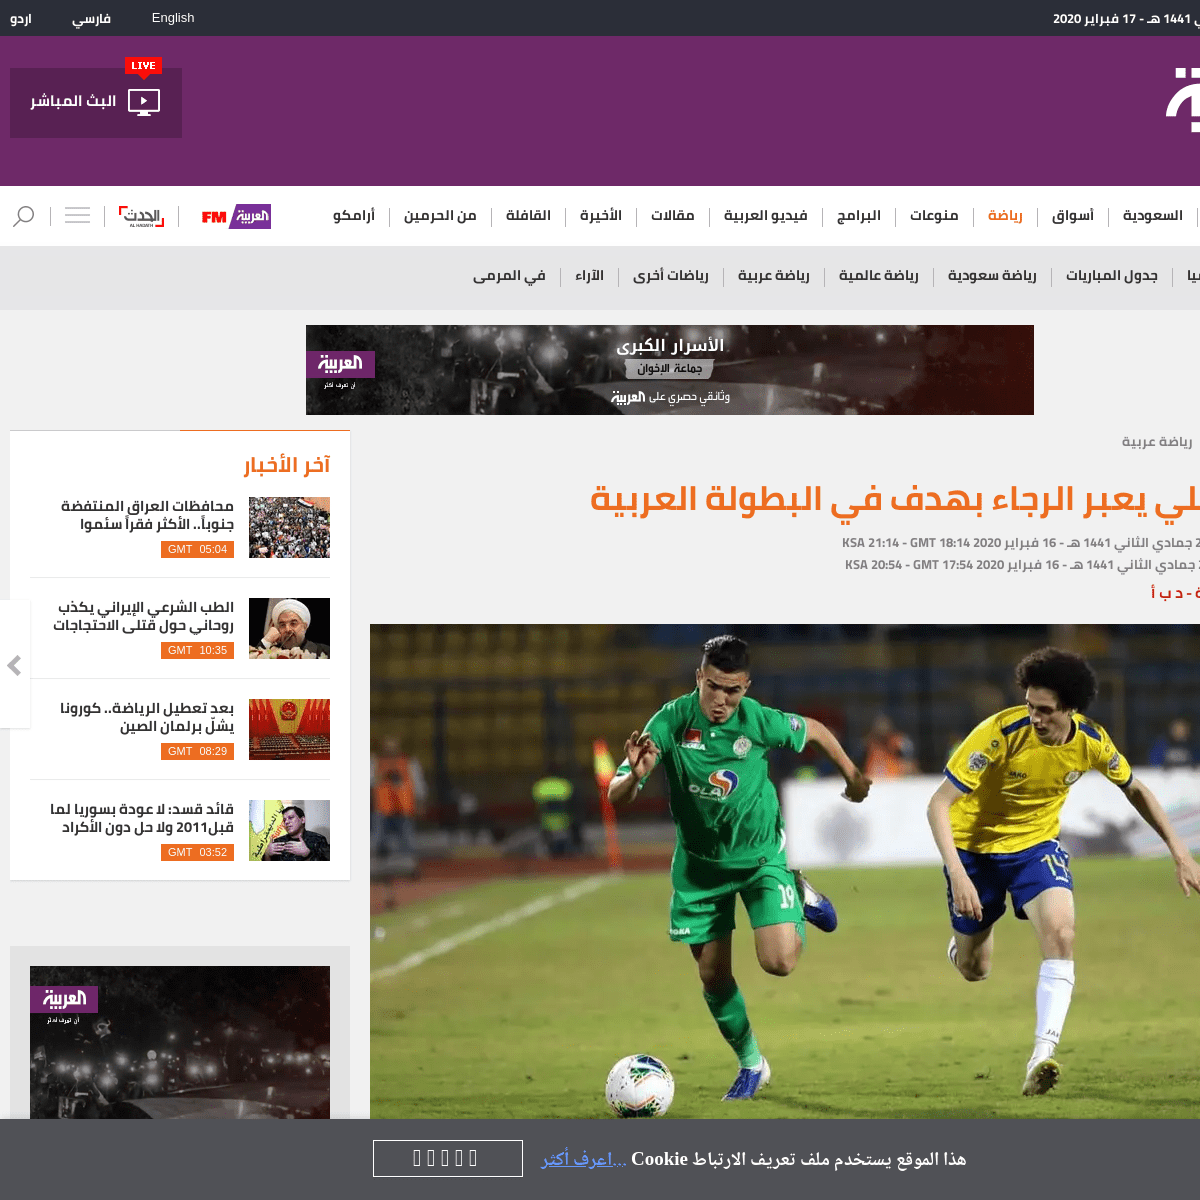 A complete backup of www.alarabiya.net/ar/sport/arab-sport/2020/02/16/%D8%A7%D9%84%D8%A7%D8%B3%D9%85%D8%A7%D8%B9%D9%8A%D9%84%D9%